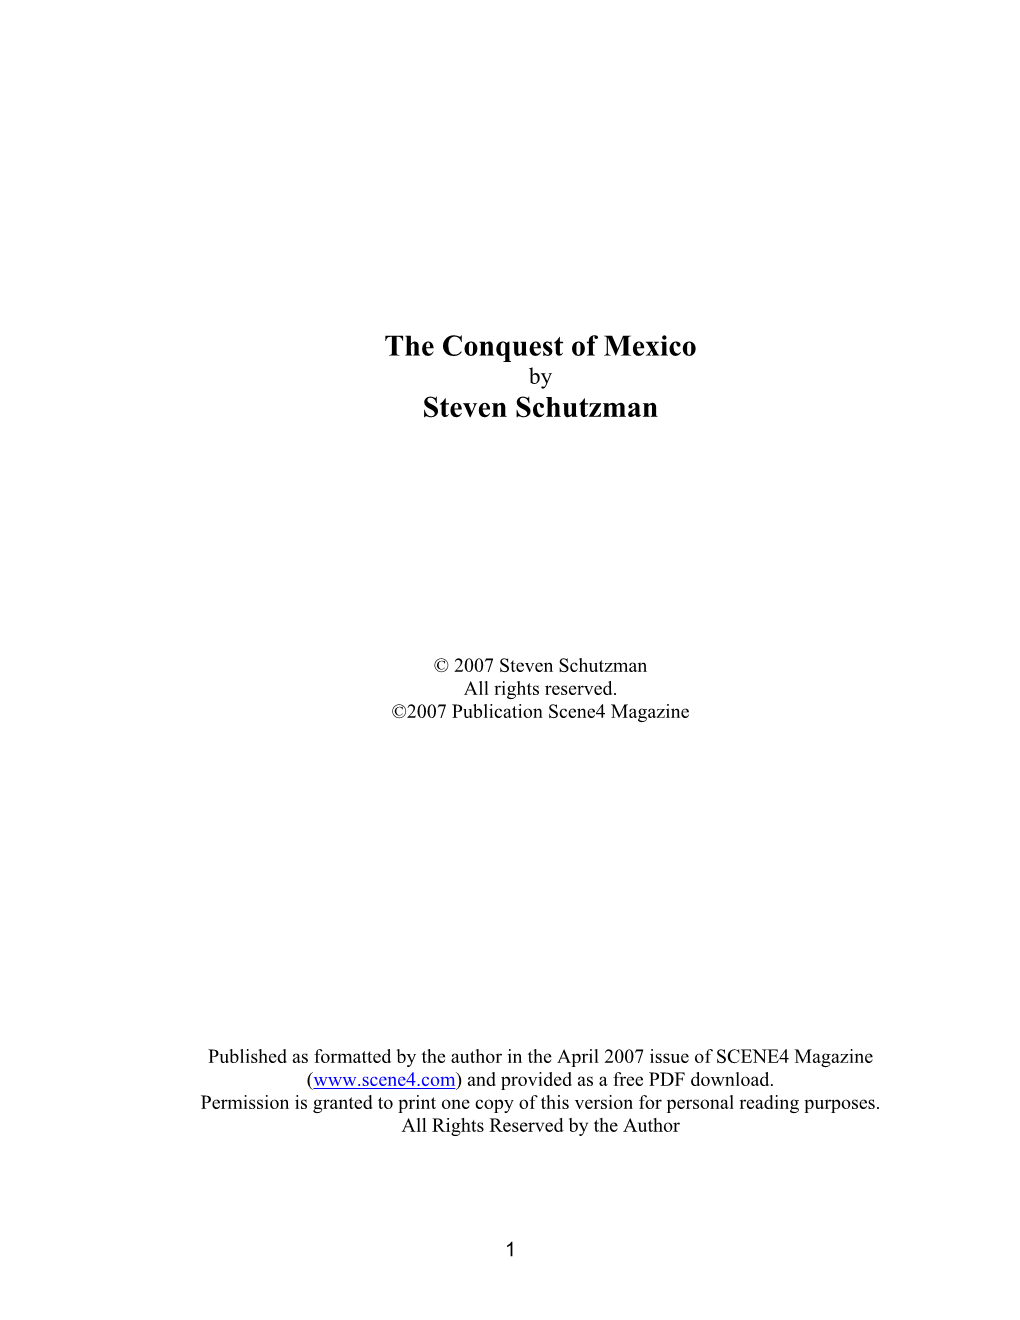 The Conquest of Mexico by Steven Schutzman